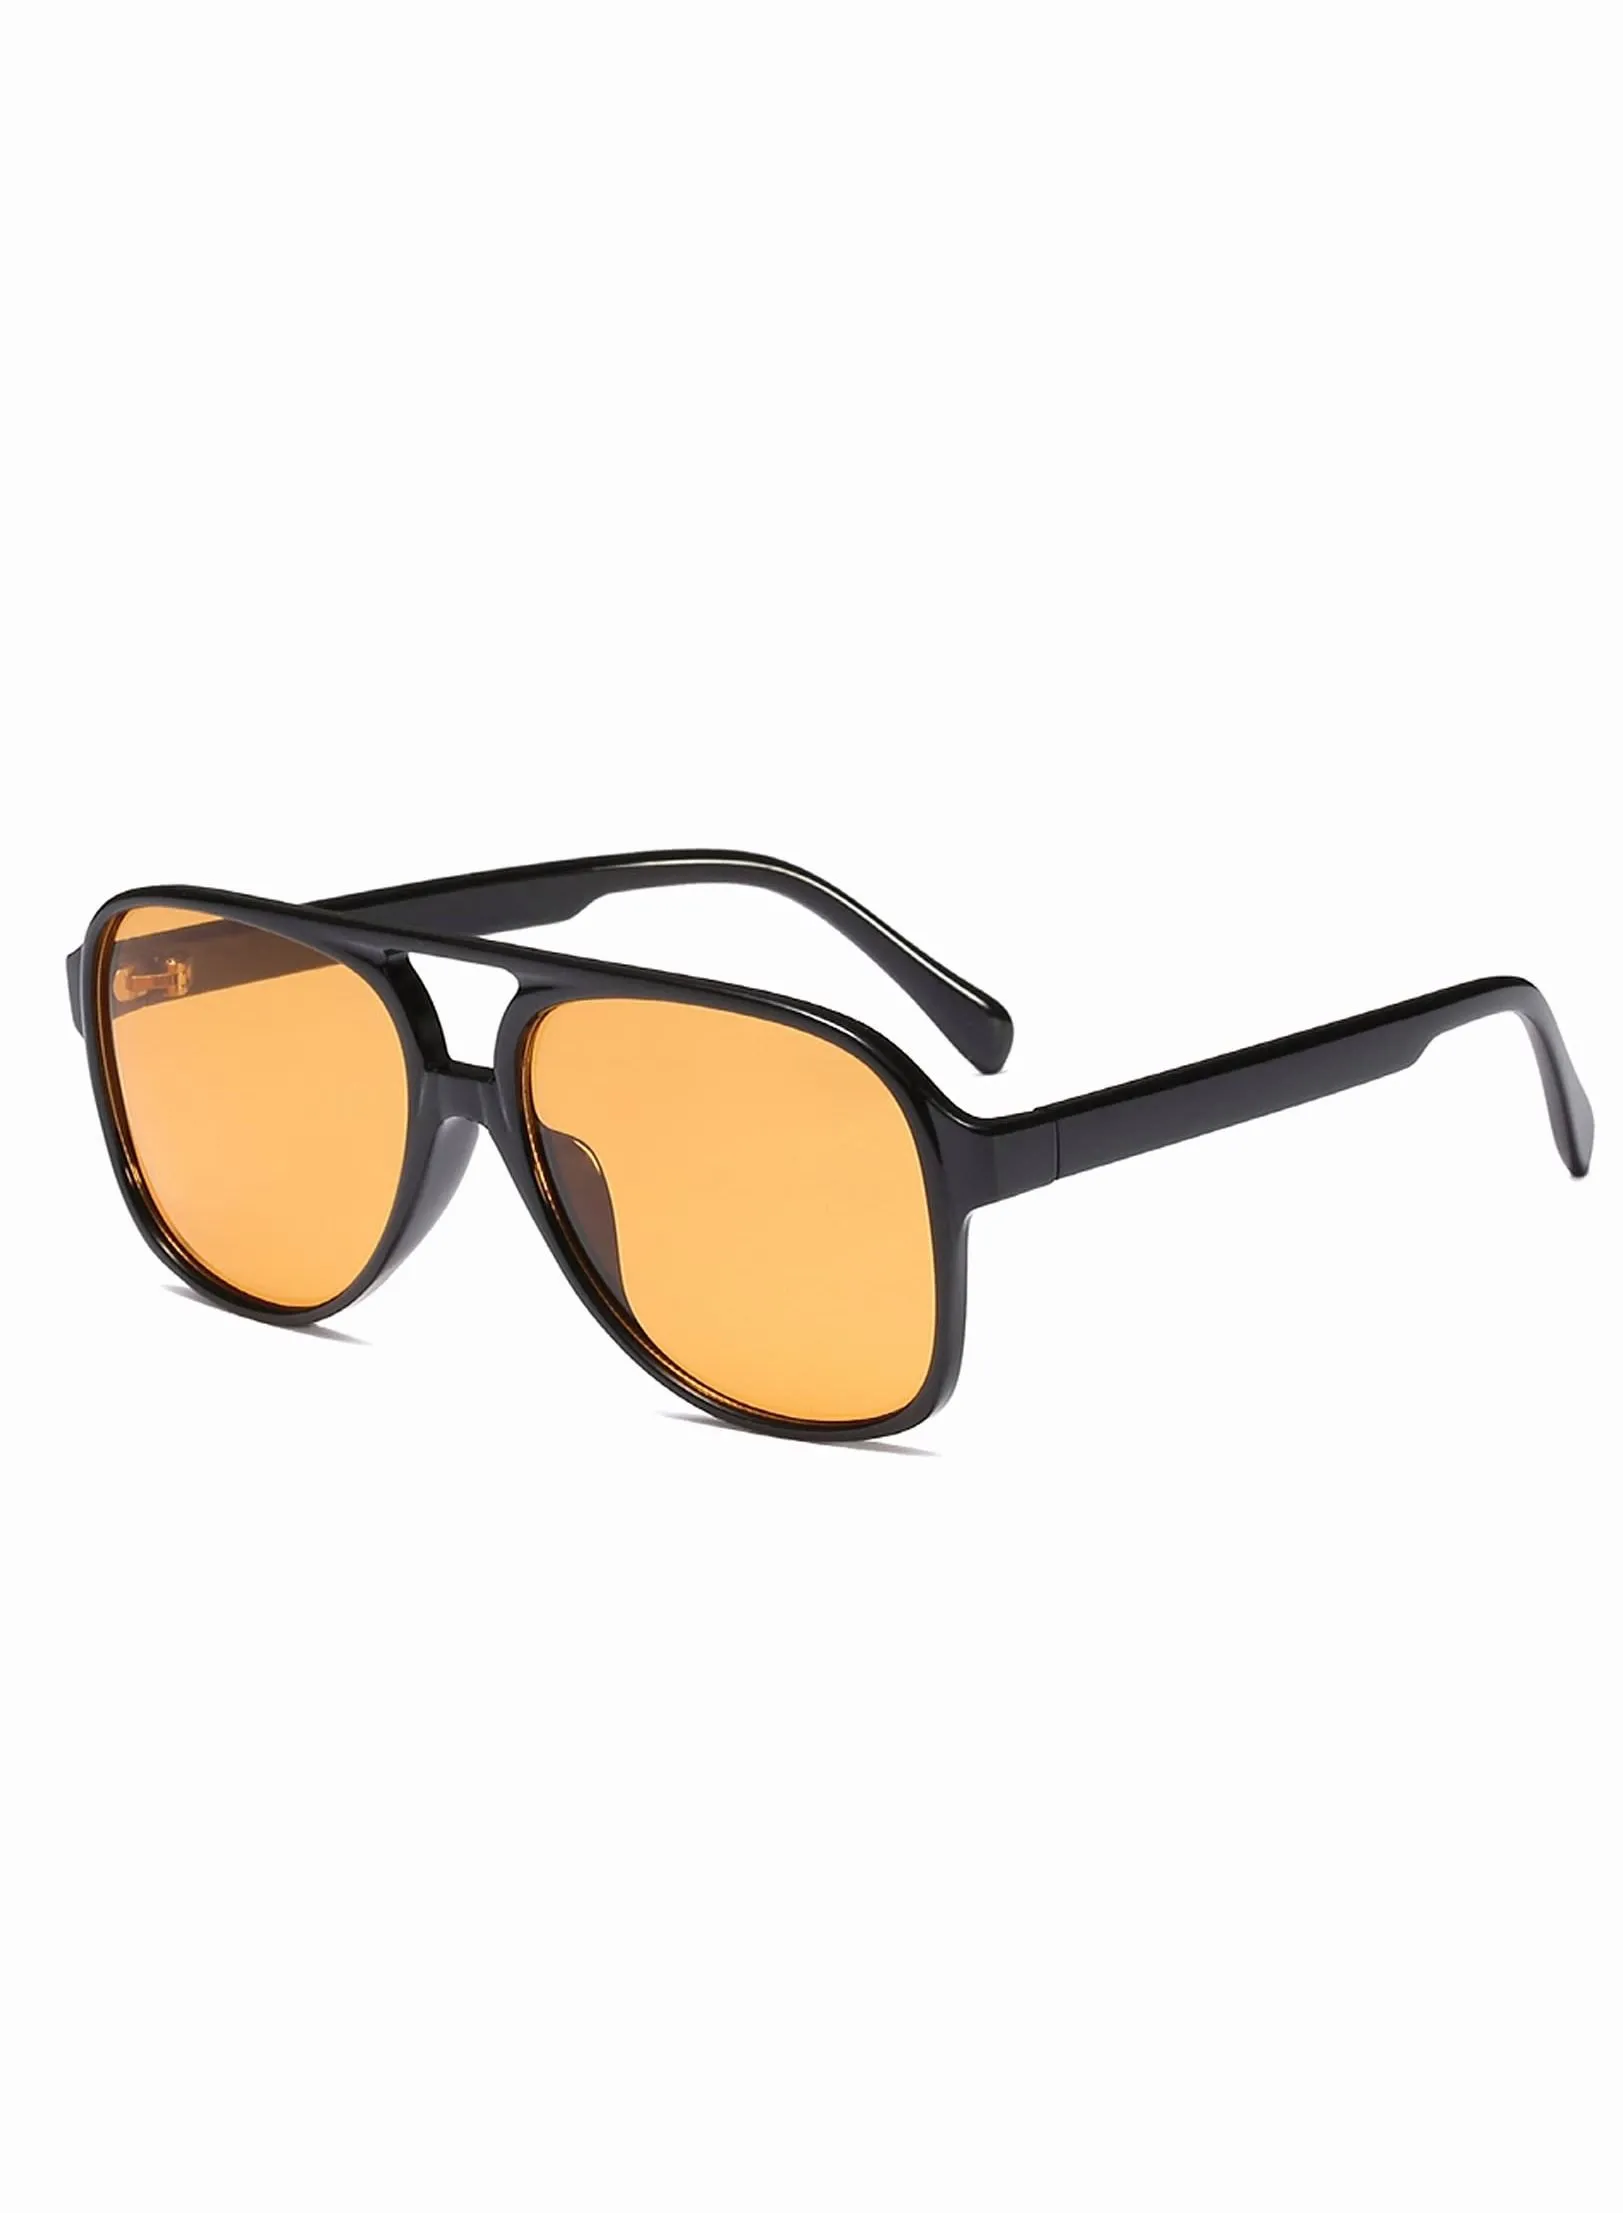 roaiss Classic Vintage Large Frame Retro  Aviator Sunglasses for Women Men